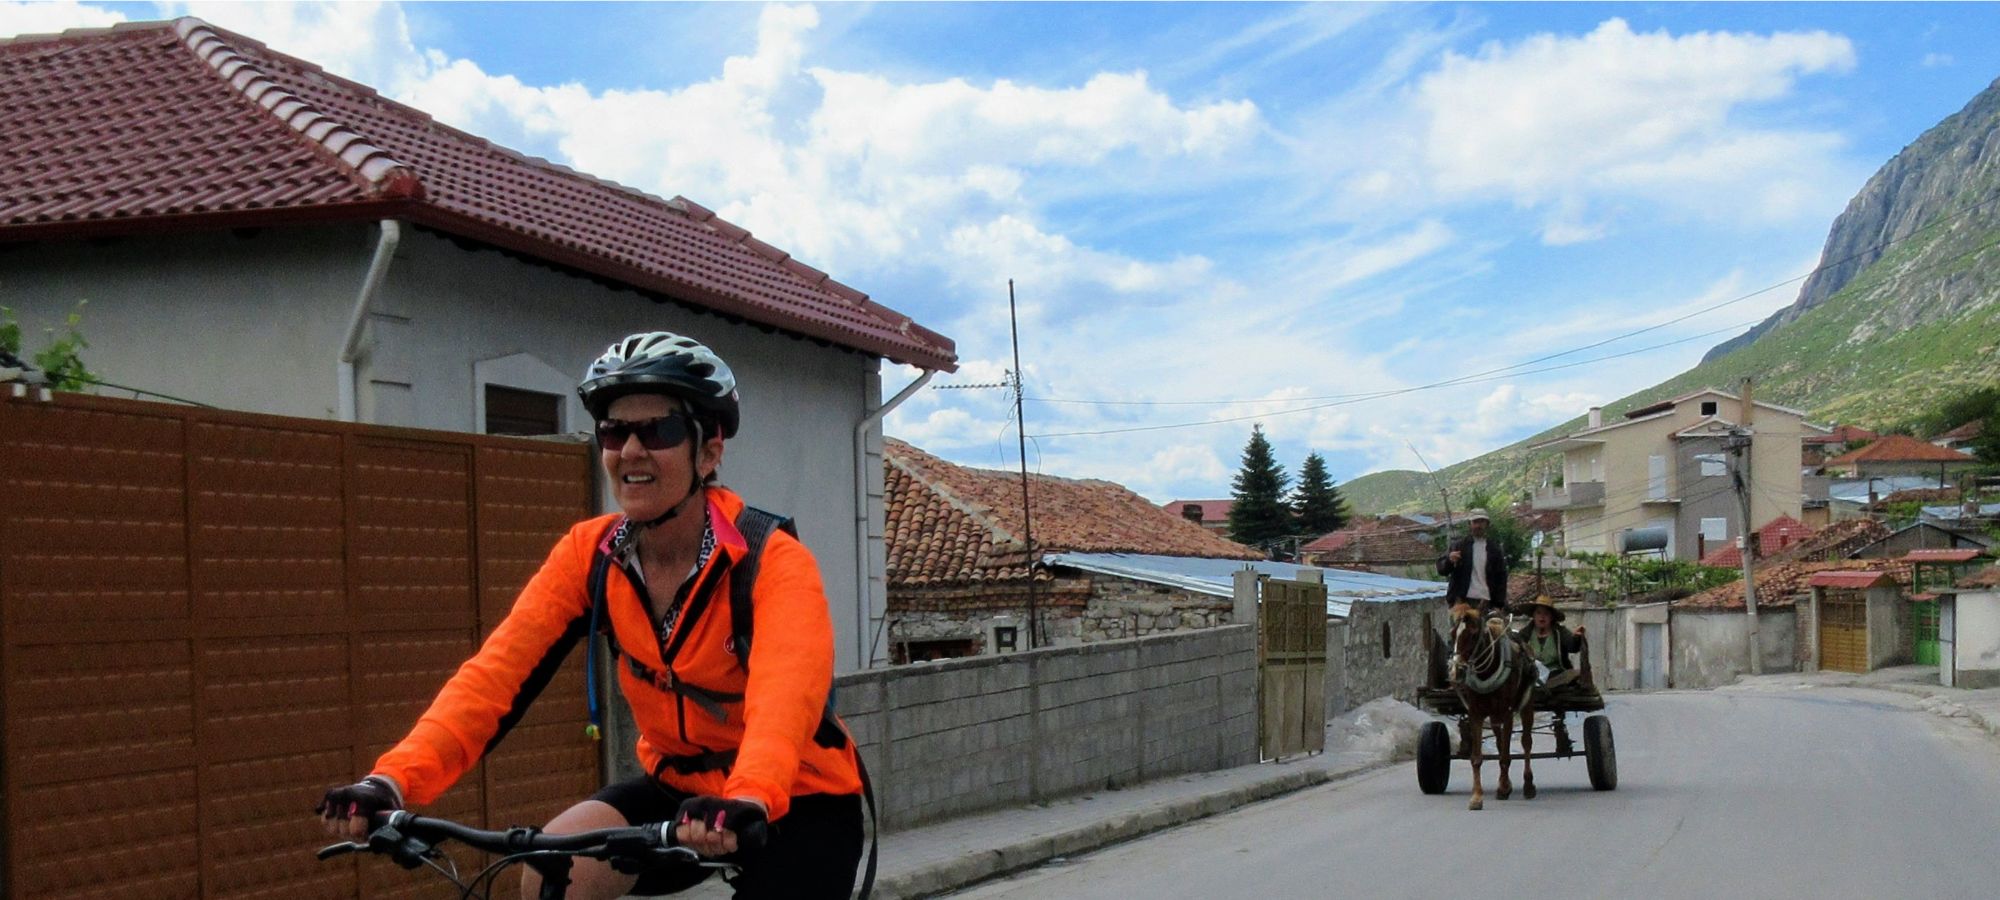 Cycling Holidays Albania